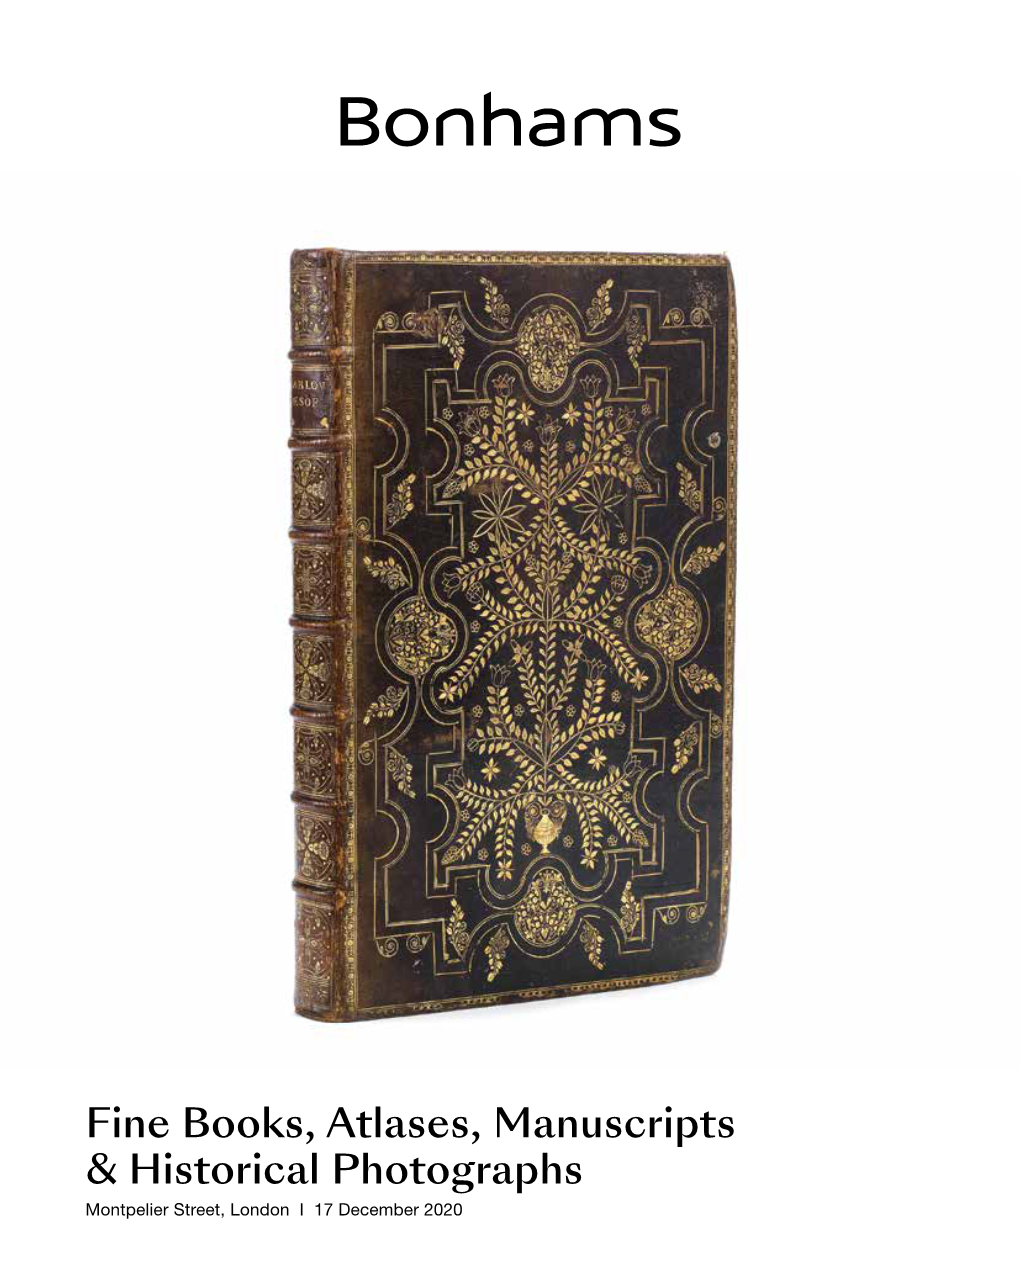 Fine Books, Atlases, Manuscripts & Historical Photographs